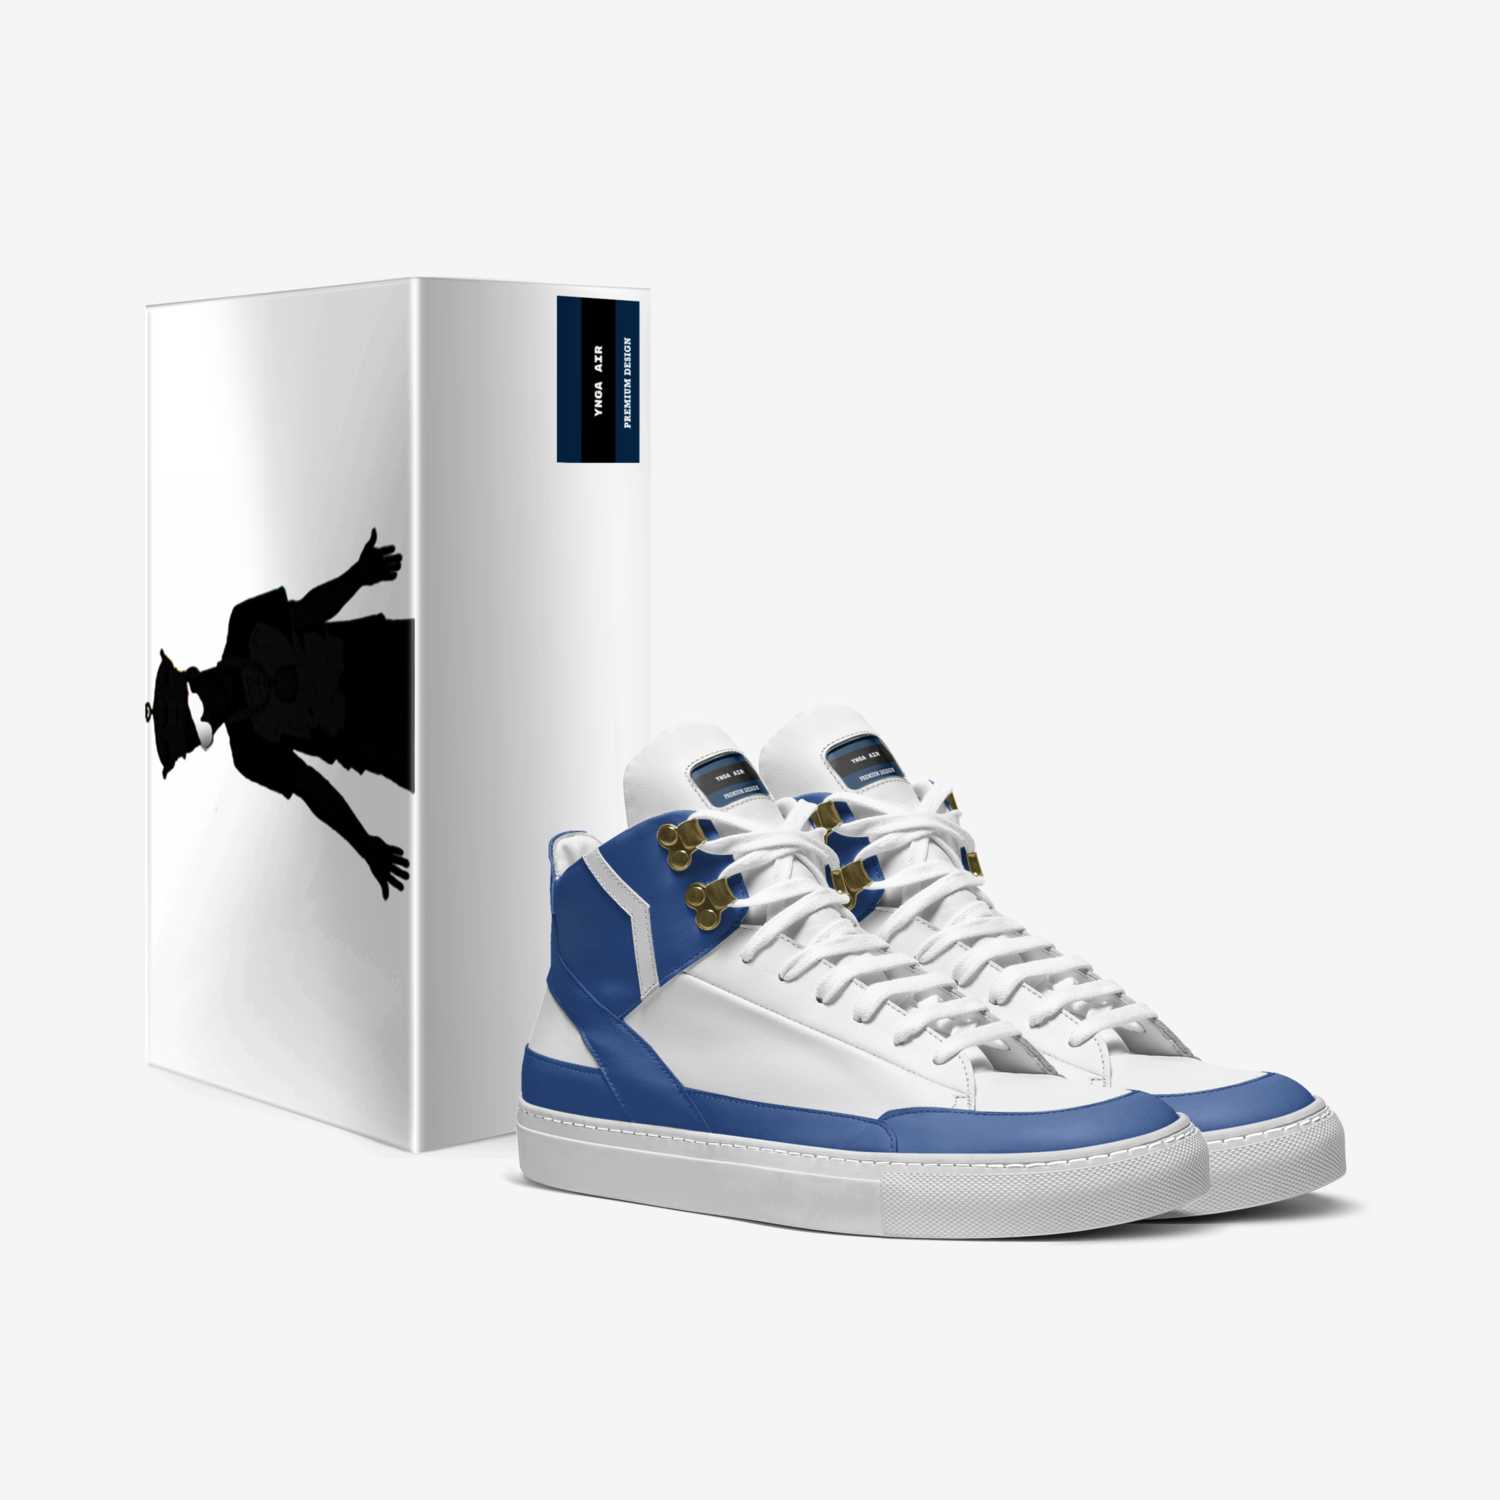 YNGA AIR custom made in Italy shoes by Nio Jackson | Box view